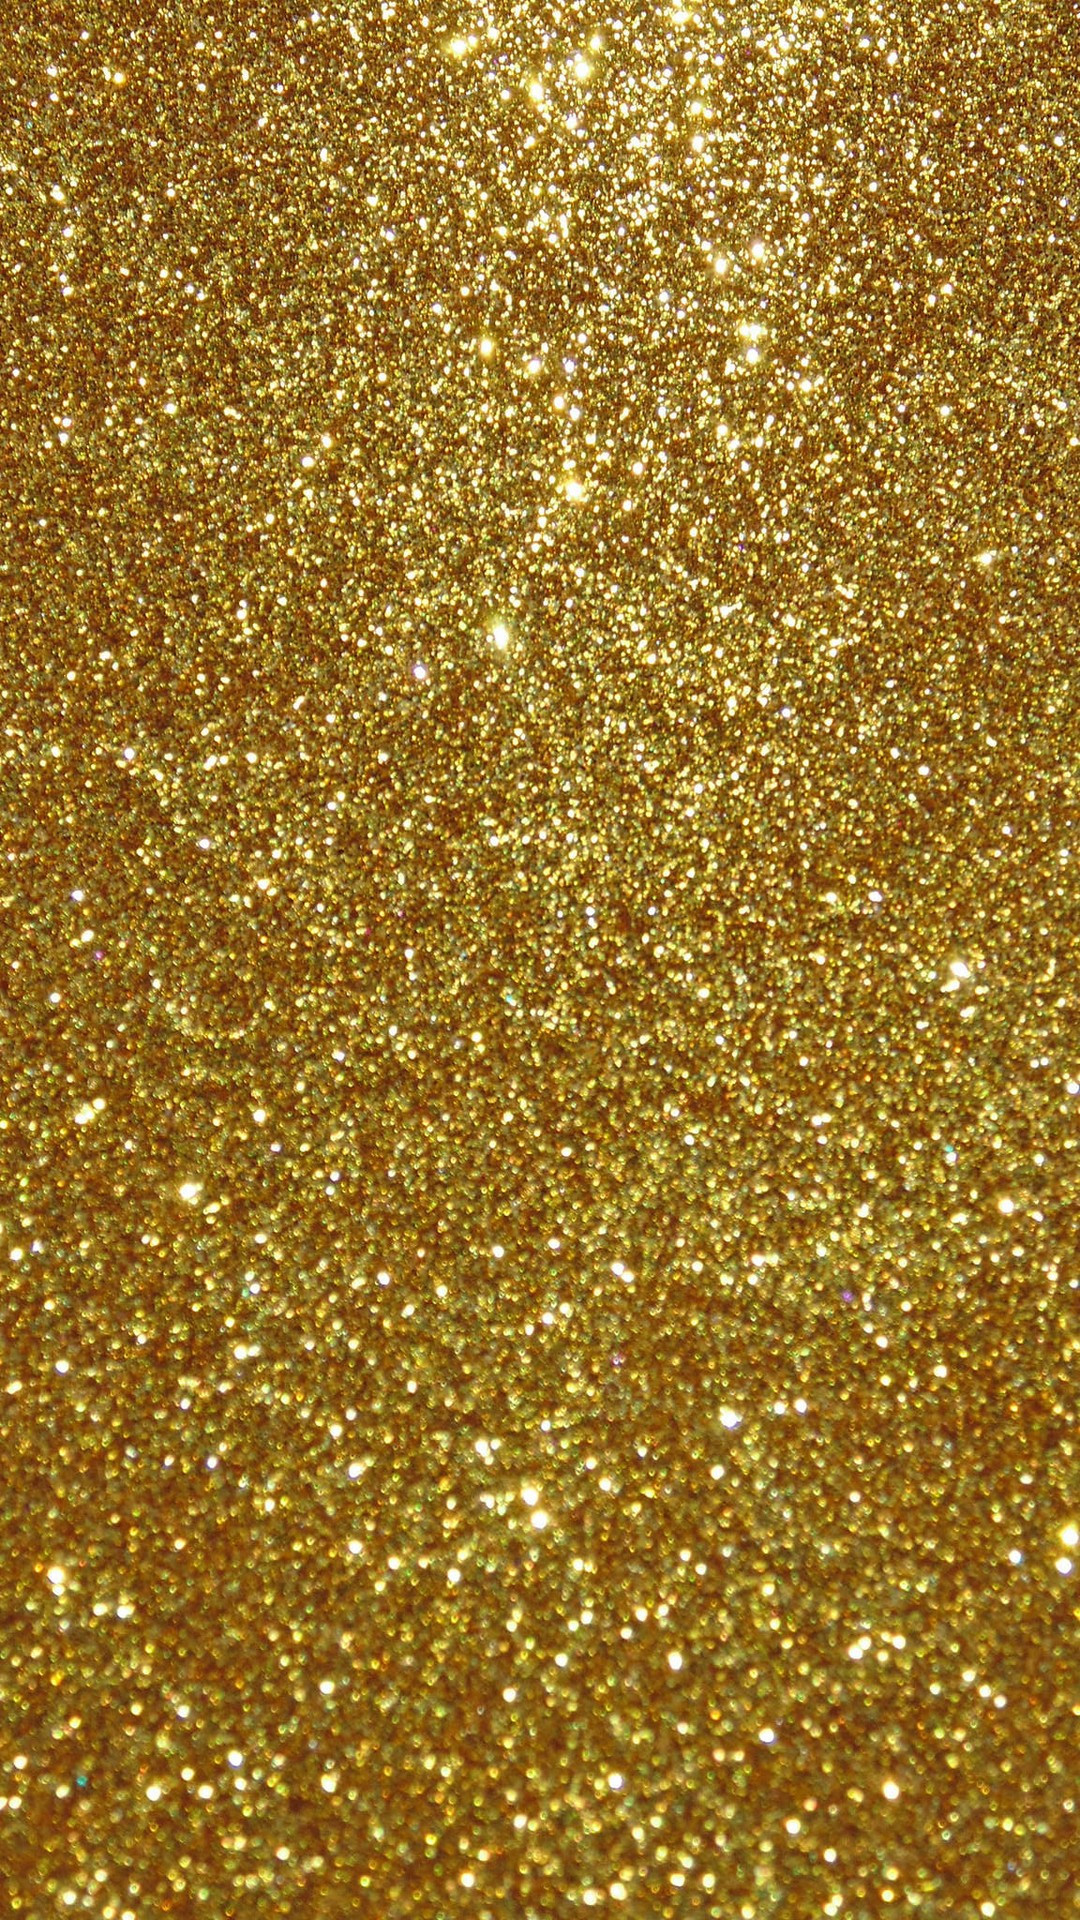 1080x1920 Glitter Gold Background Wallpaper New Gold Glitter Wallpaper for iPhone  2018 iPhone Wallpapers